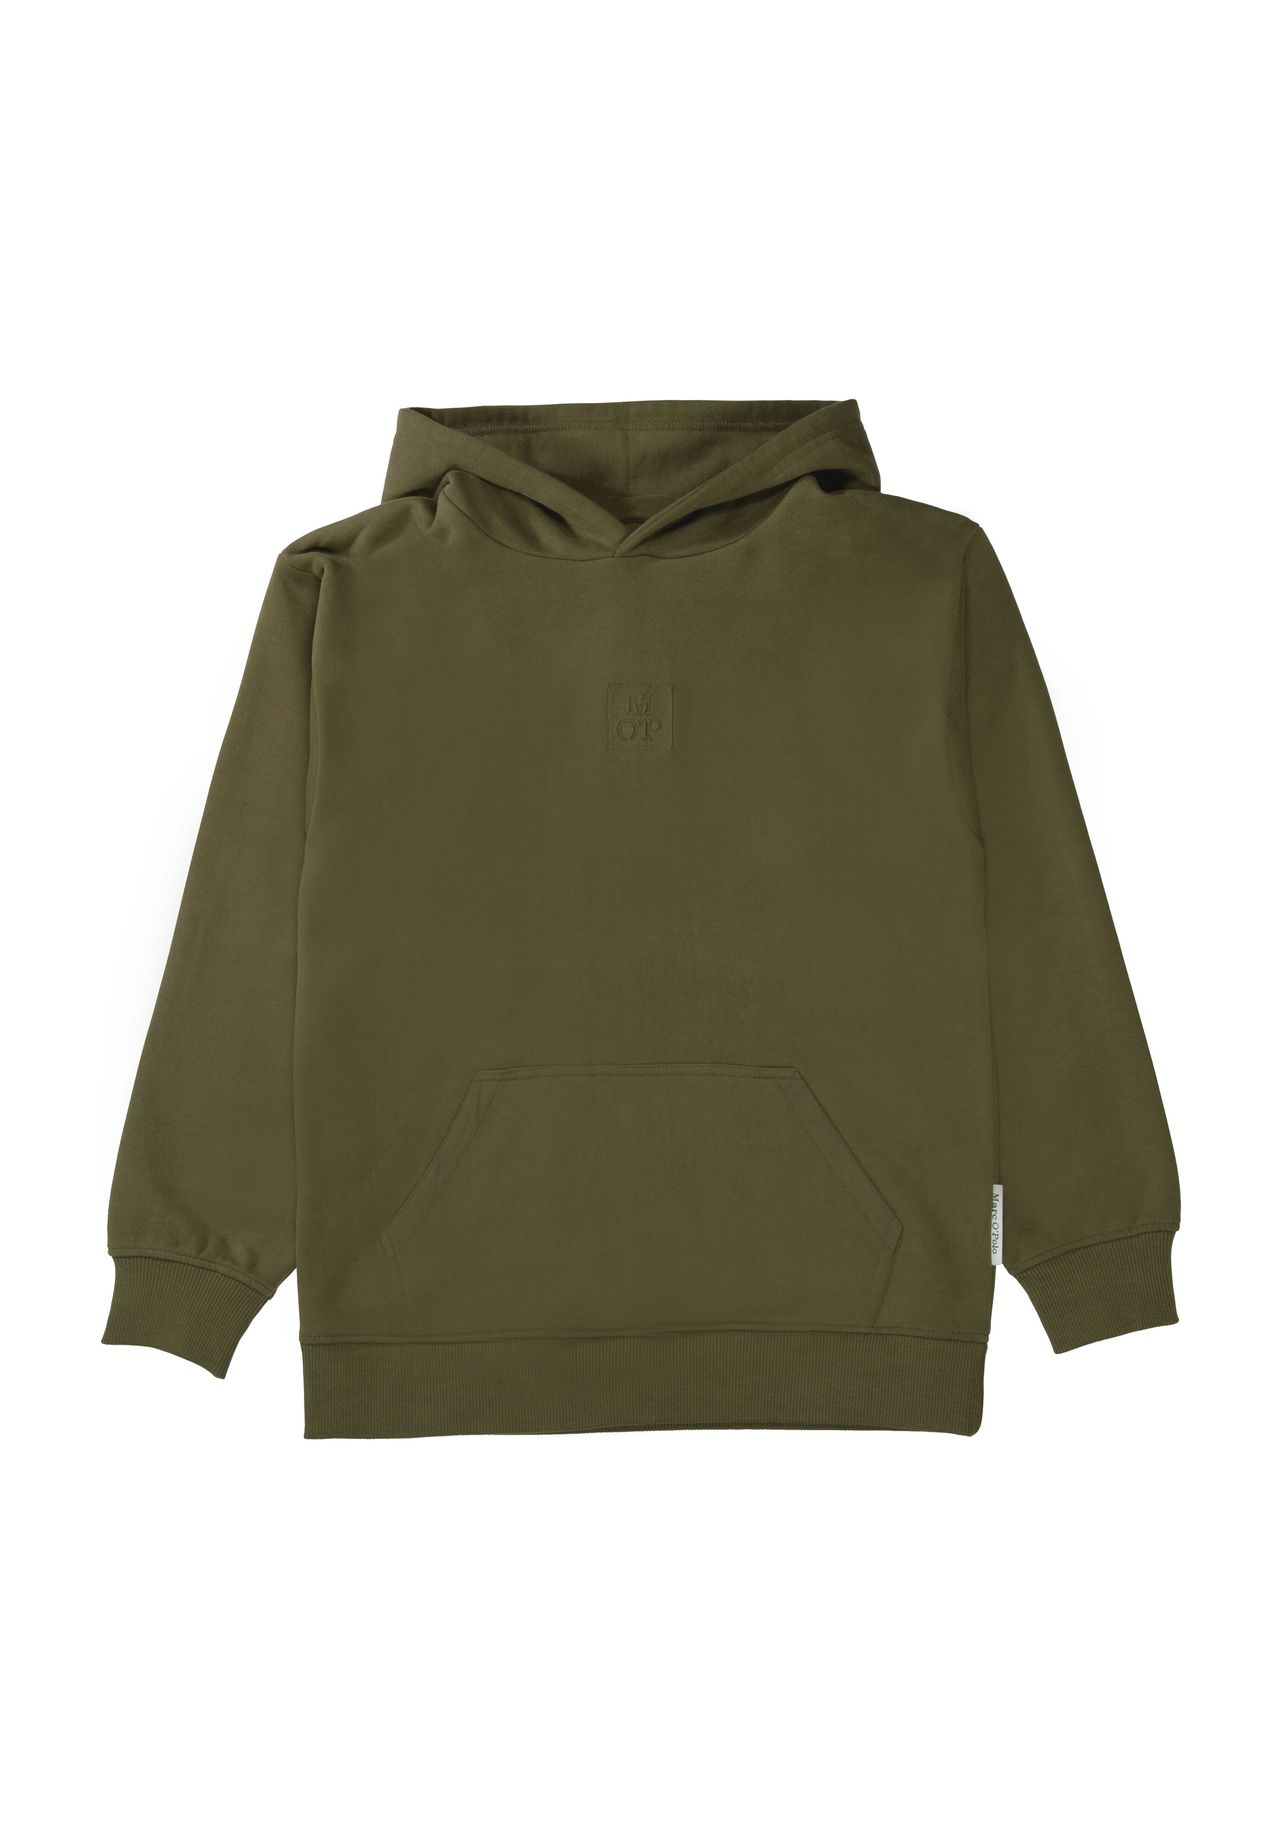 Sweatshirt 140 kaufen | GALERIA | Hoodies